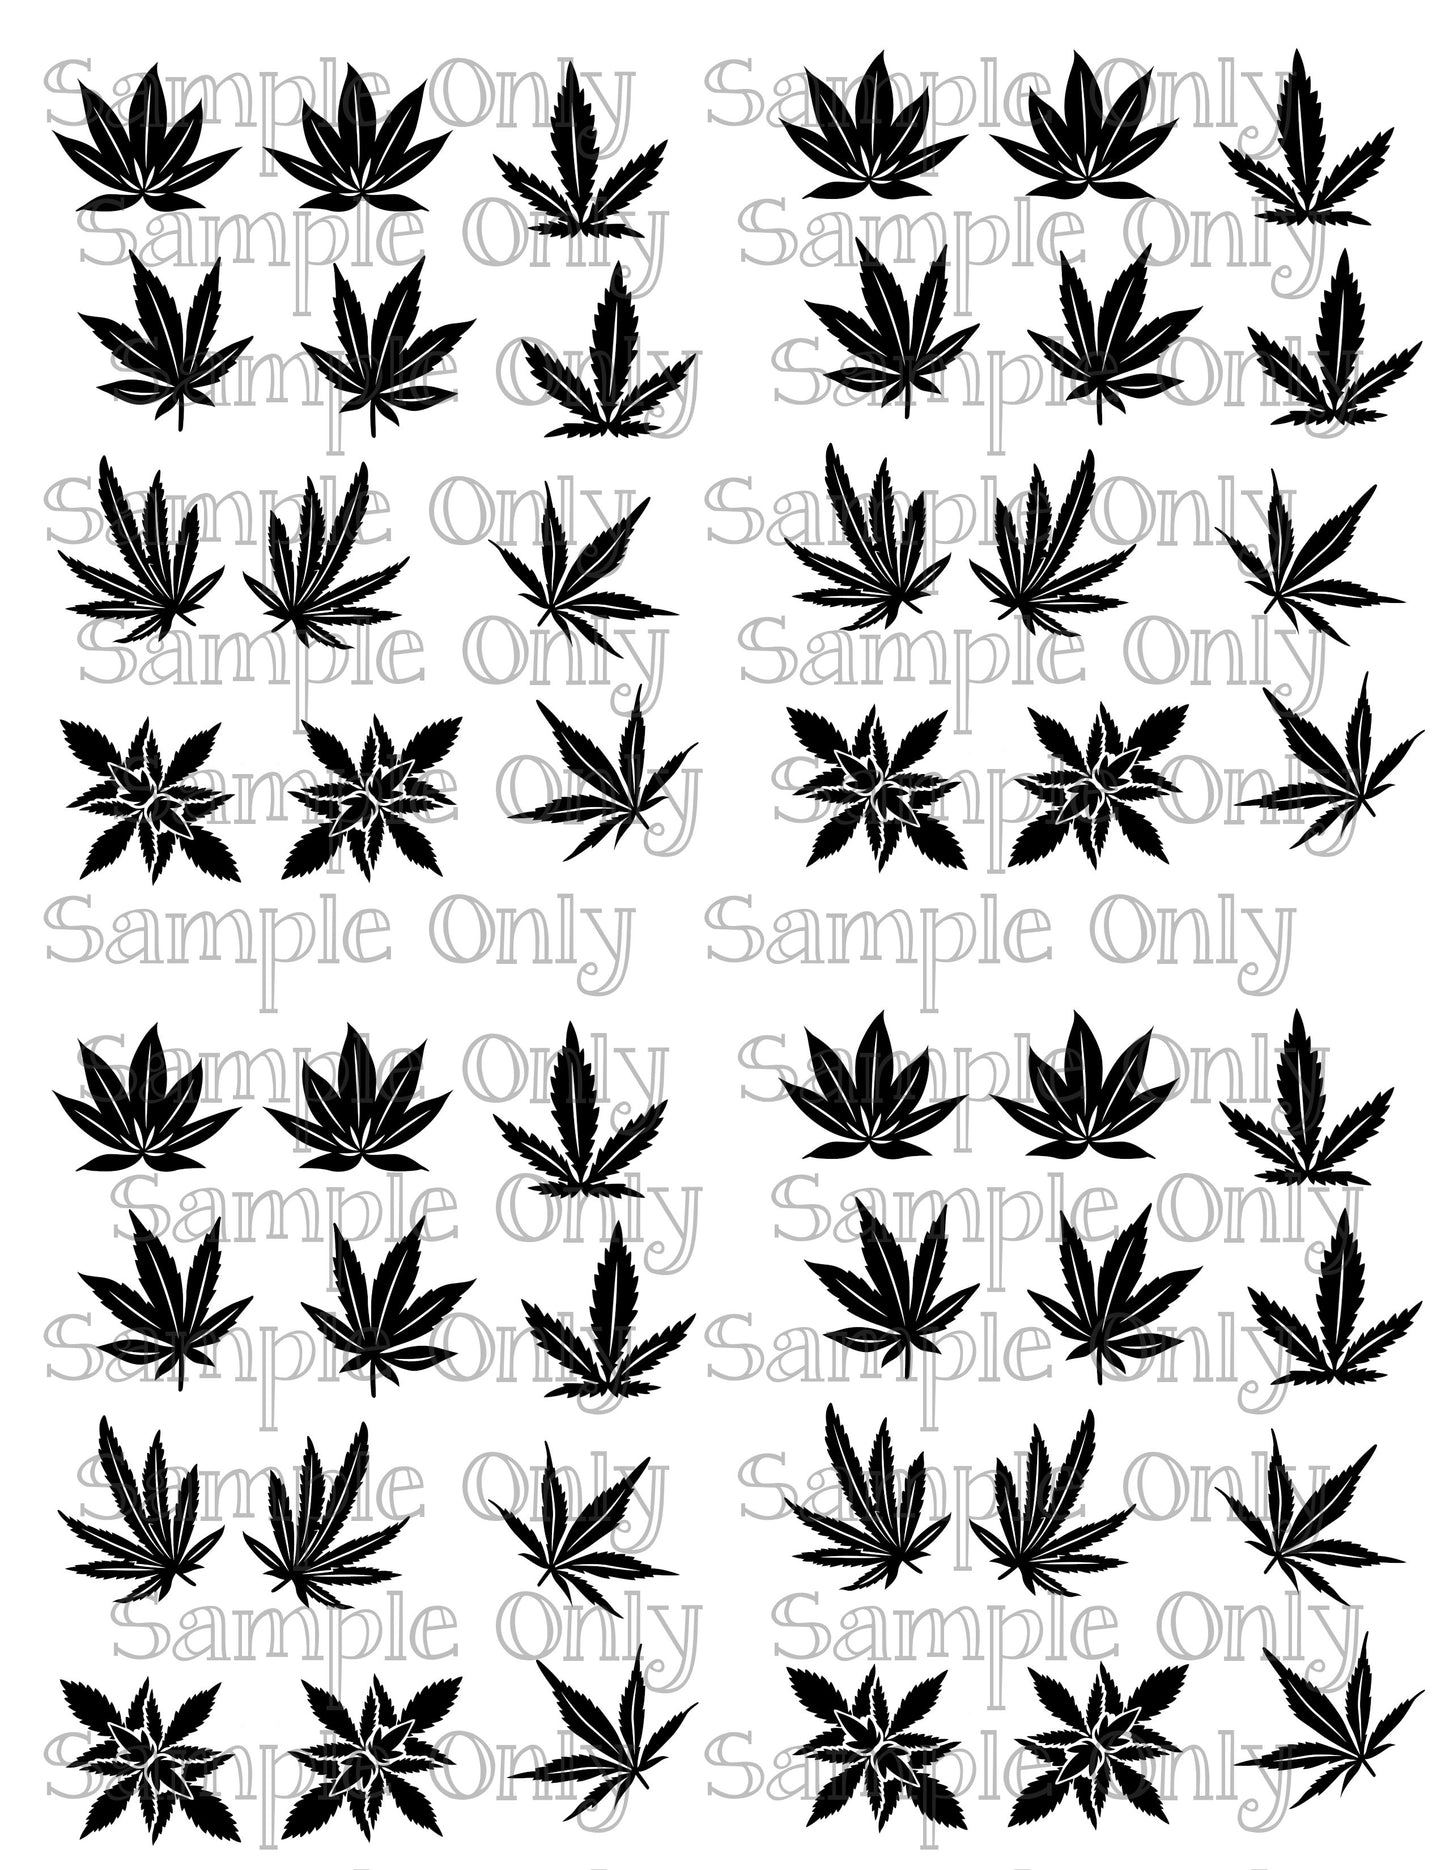 Black Cannabis Leaf MJ DIGITAL OR PRINTED Image Transfer Sheet For Polymer Clay